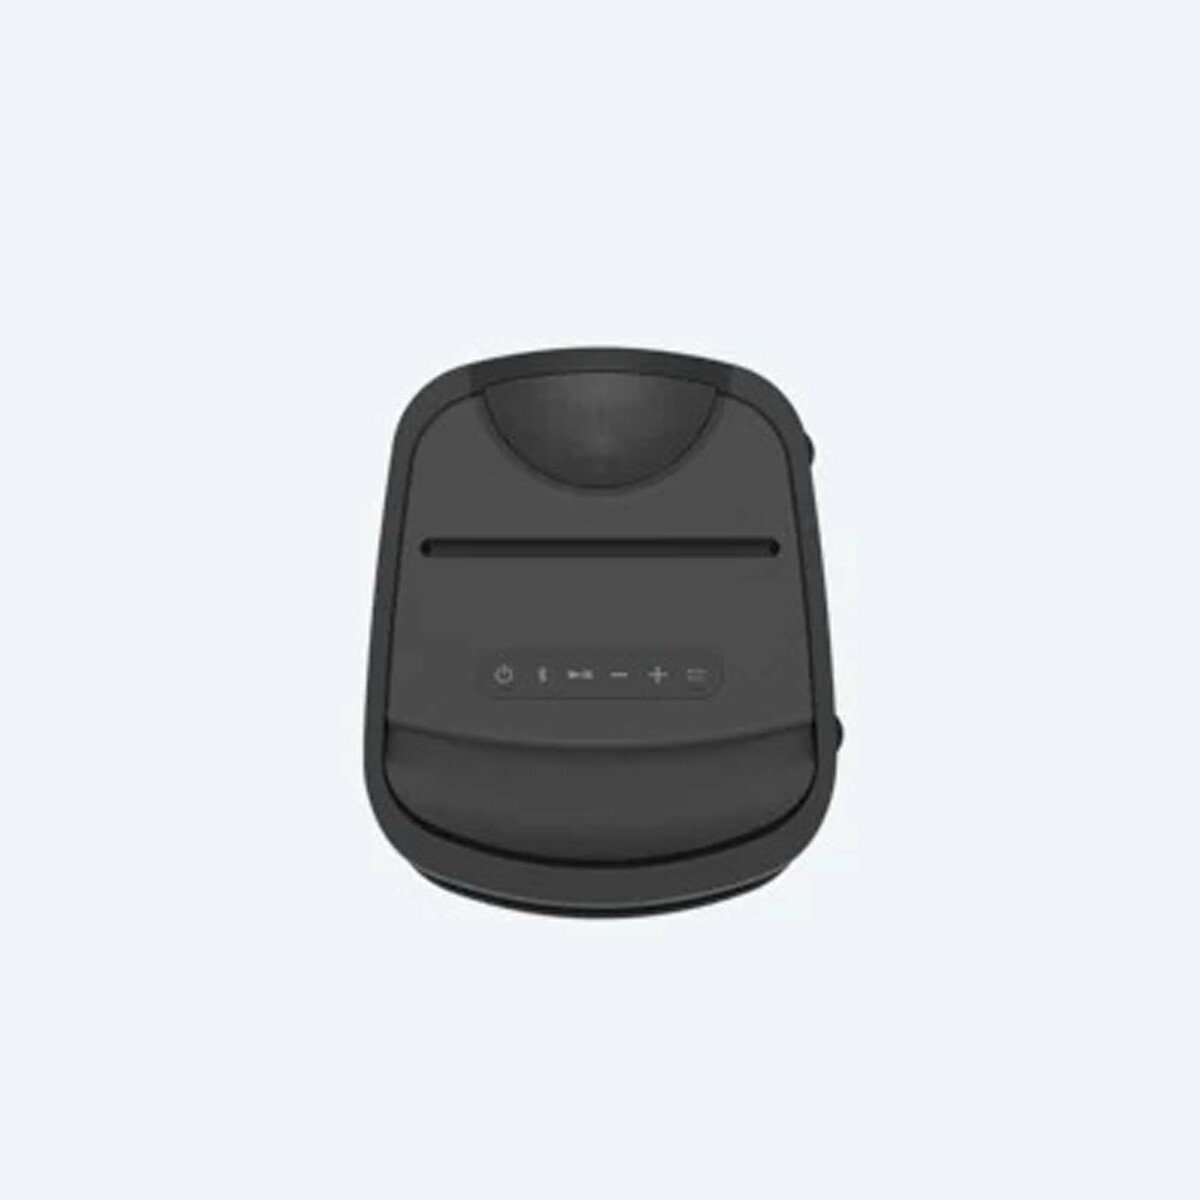 Sony OneBox Hifi SRSXP700  X-Series Portable Wireless Speaker